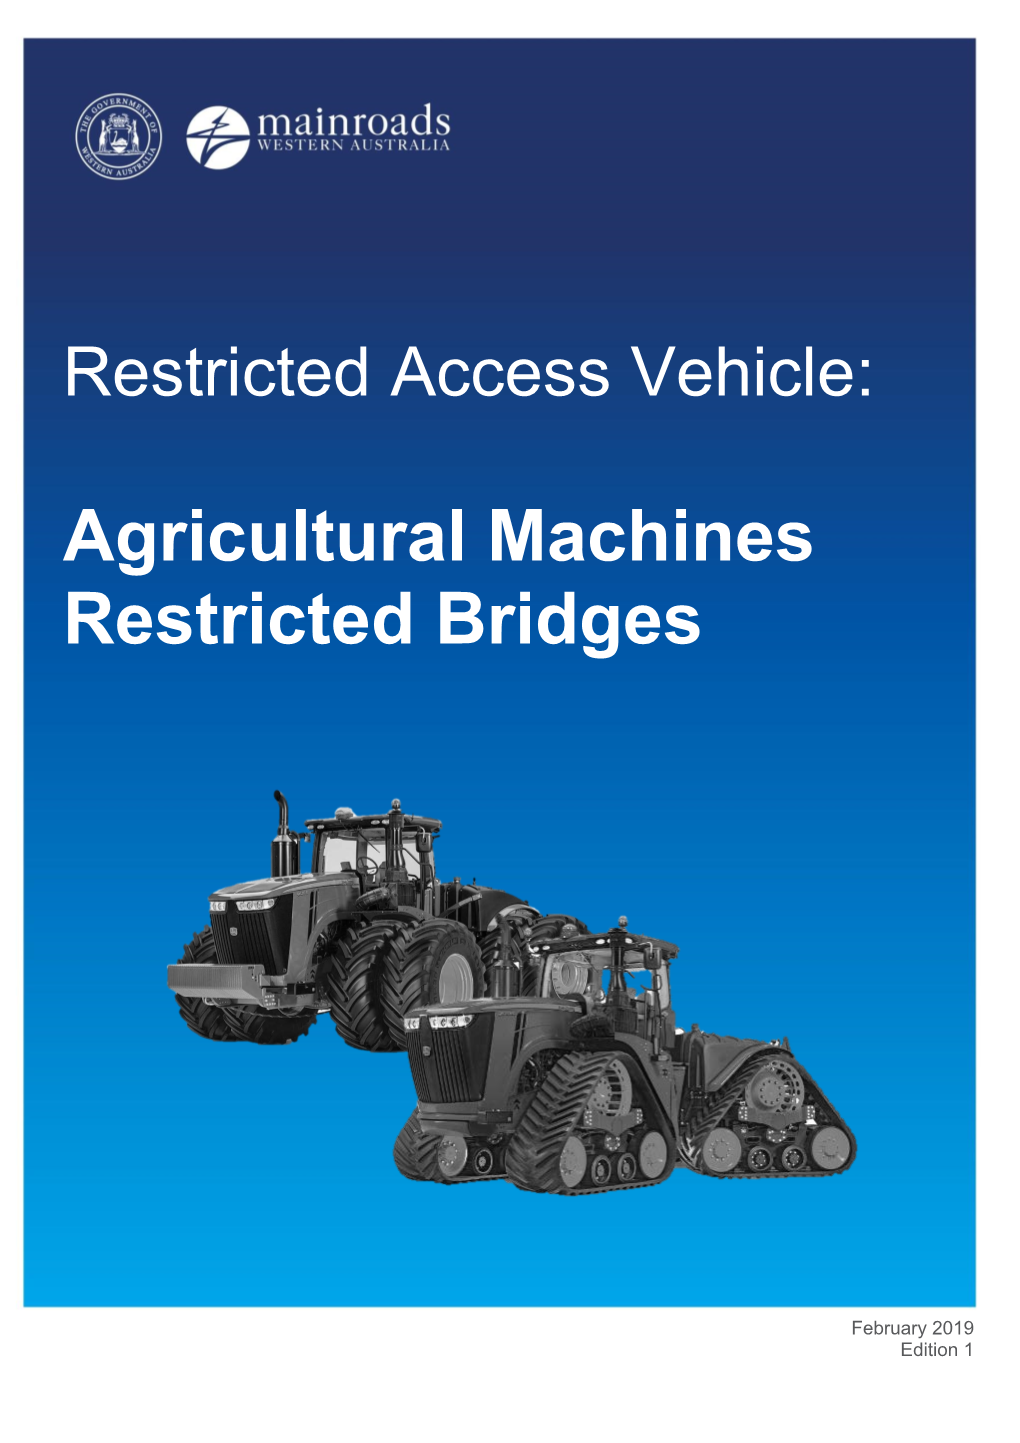 Agricultural Machines Restricted Bridges